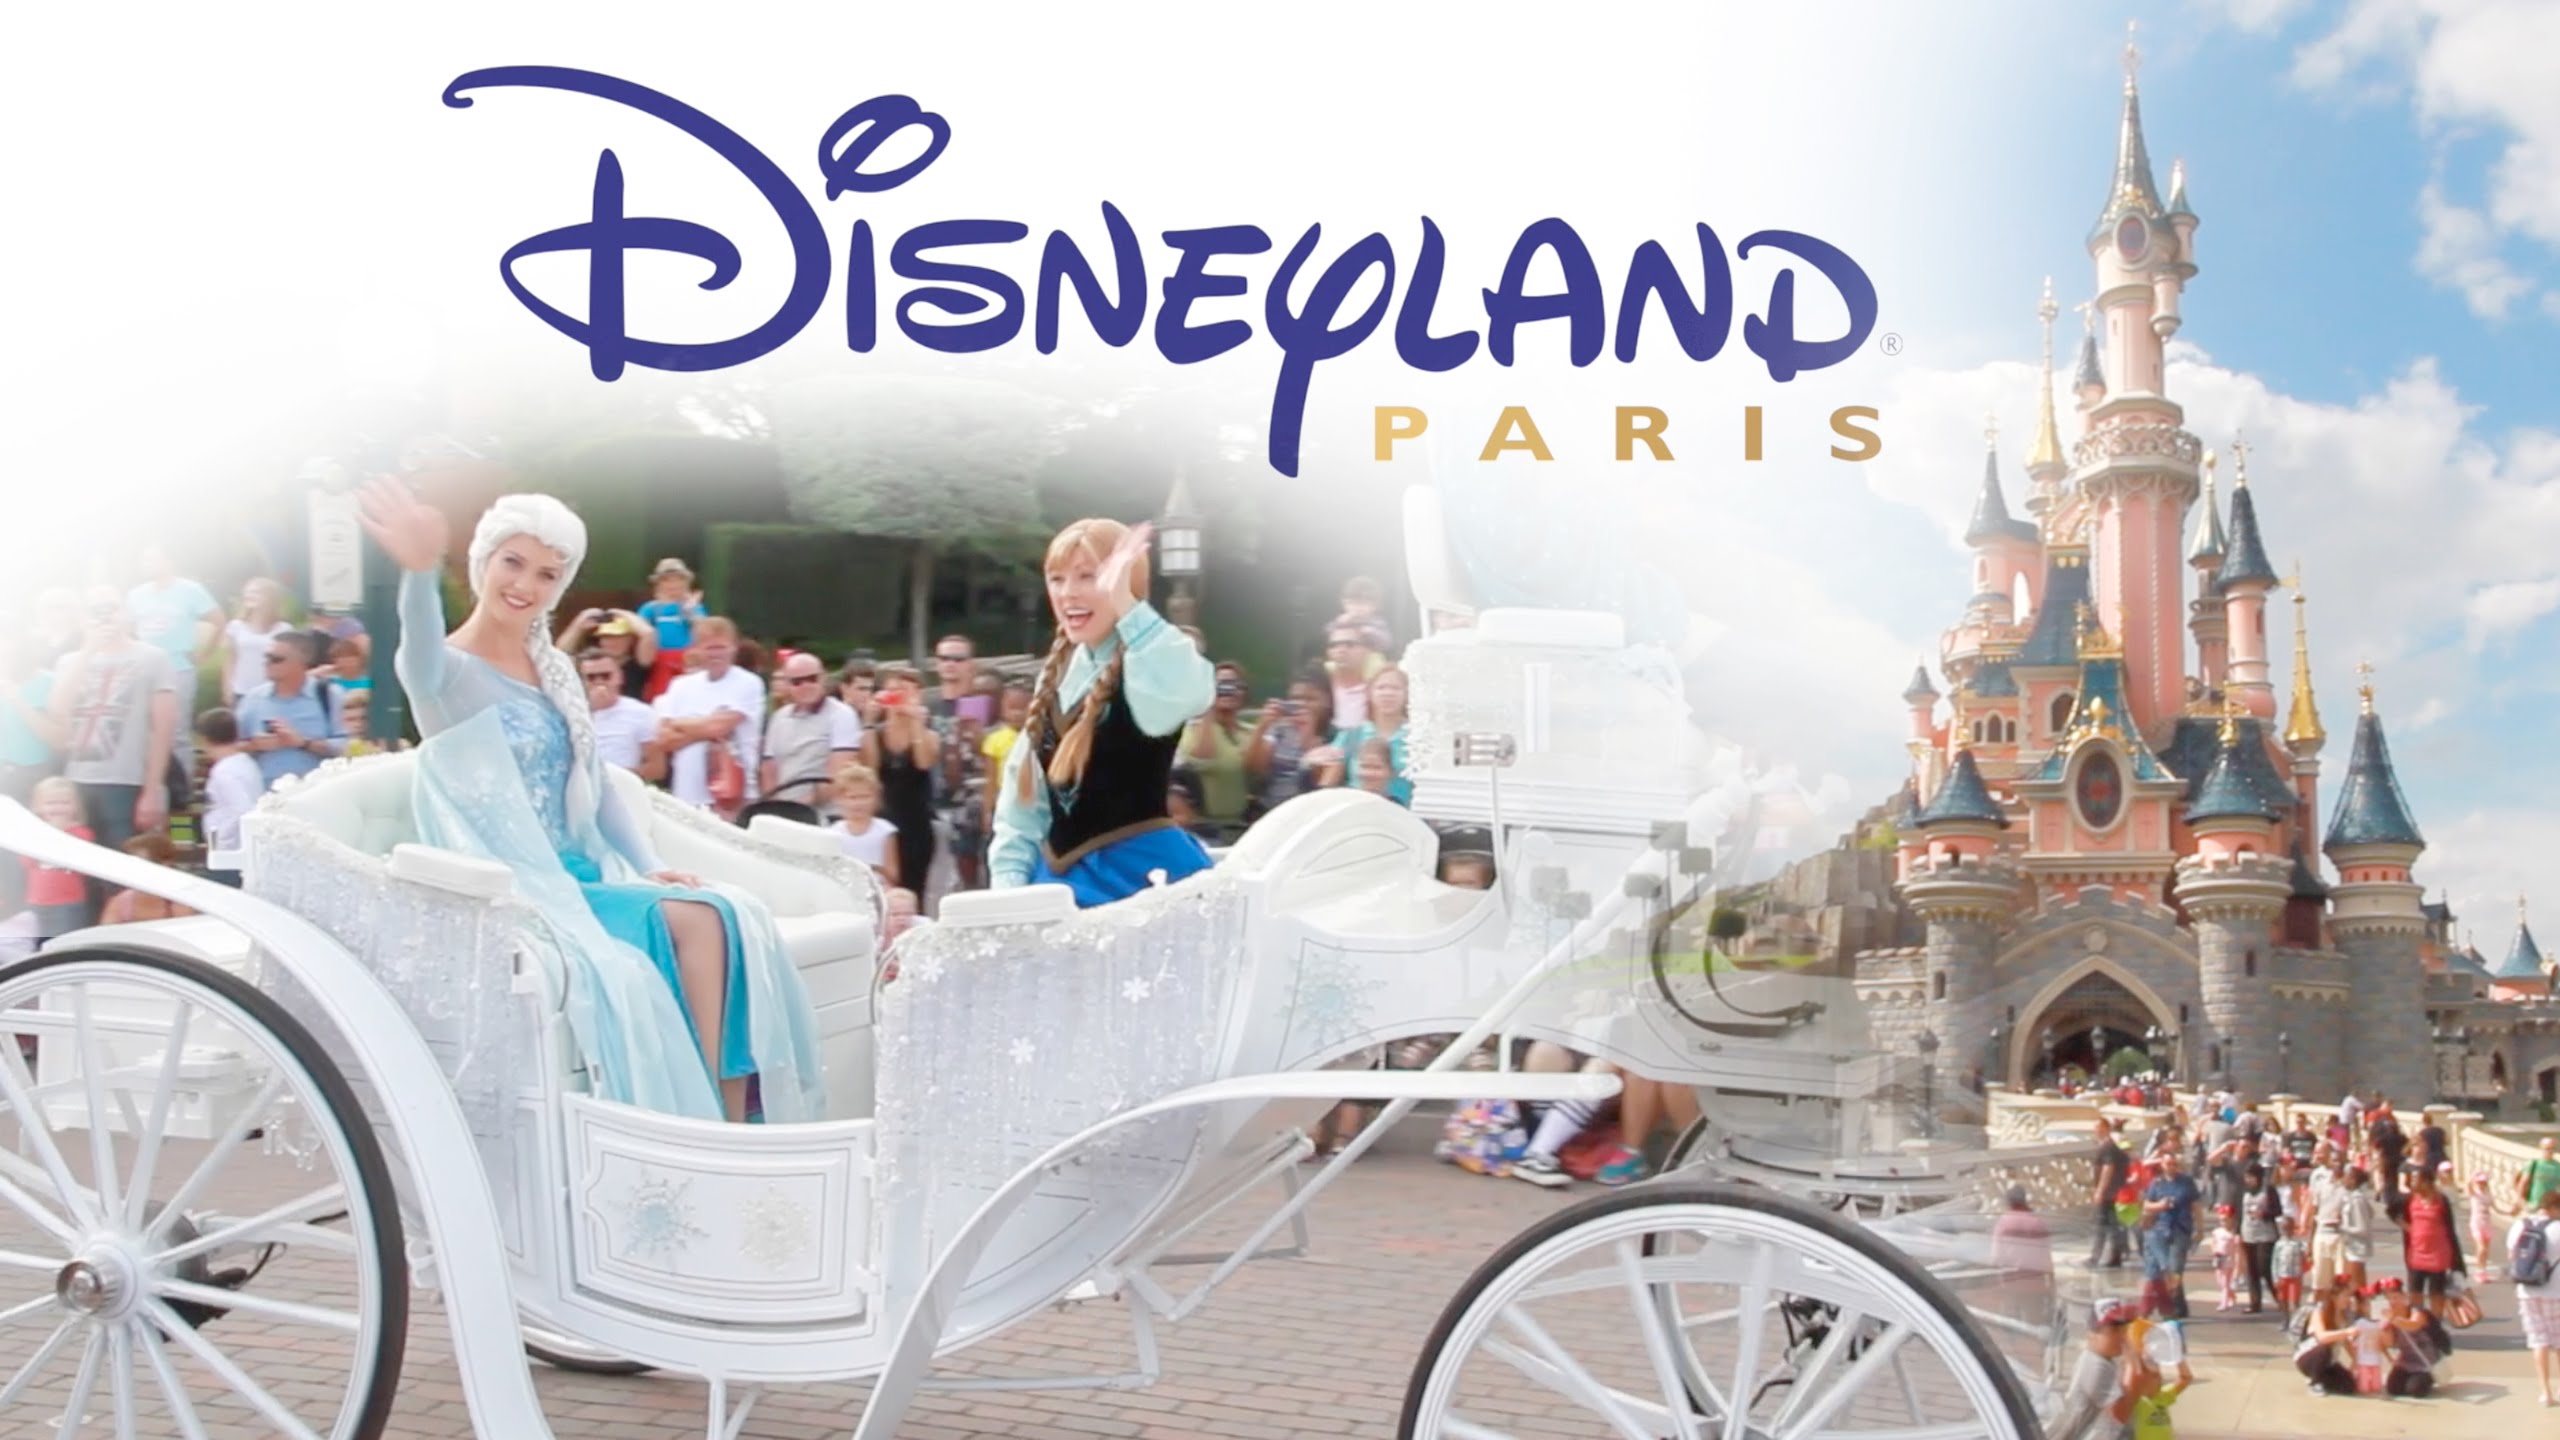 Disneyland Paris Frozen Summer Fun 2015 with Anna & Elsa! - YouTube